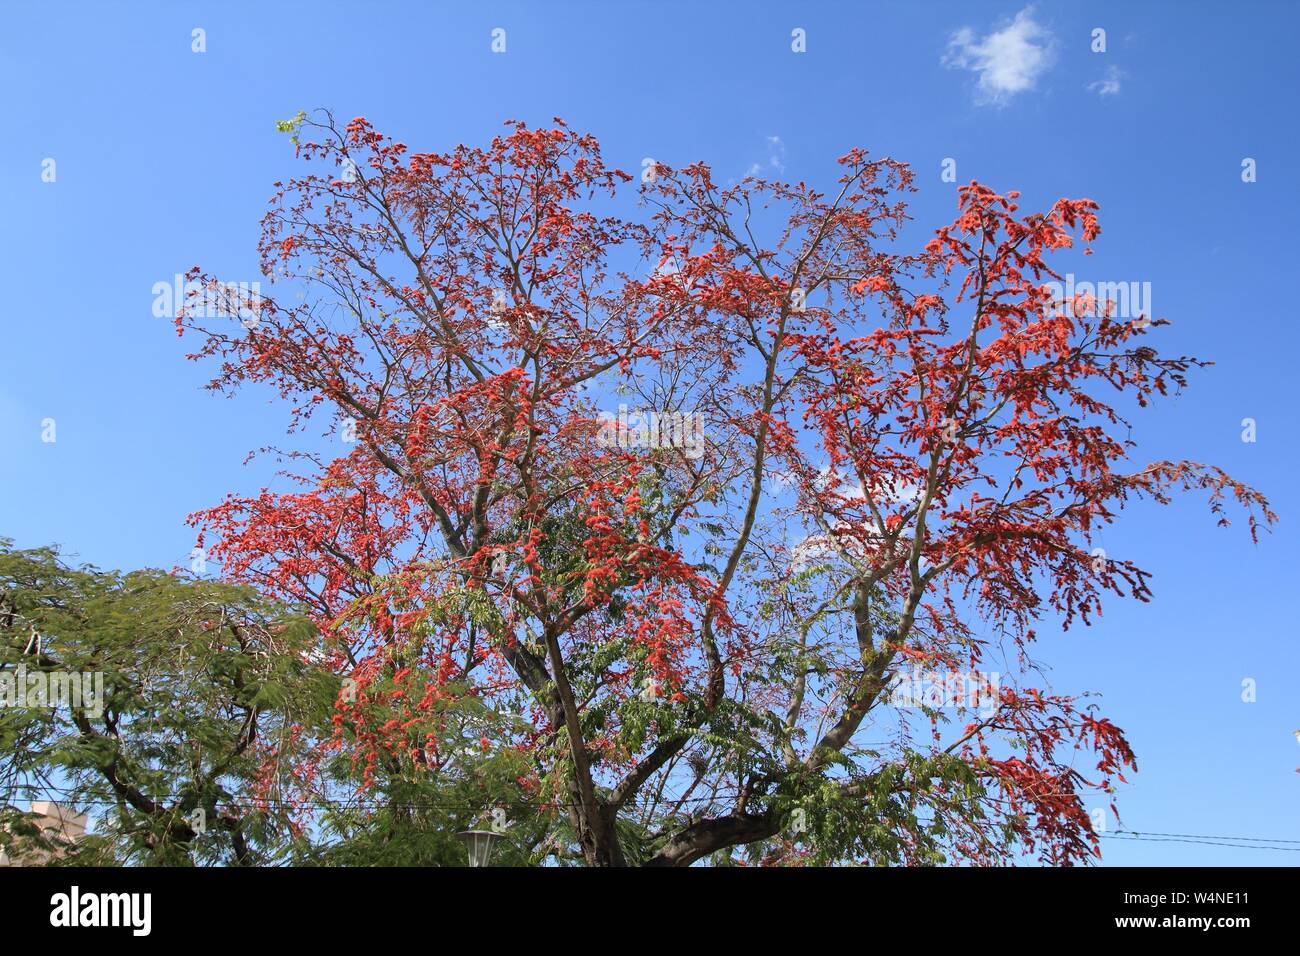 Royal Poinciana auch bekannt als flamboyant Tree (Latein: delonix Regia). Rot blühenden Baum in Kuba. Stockfoto